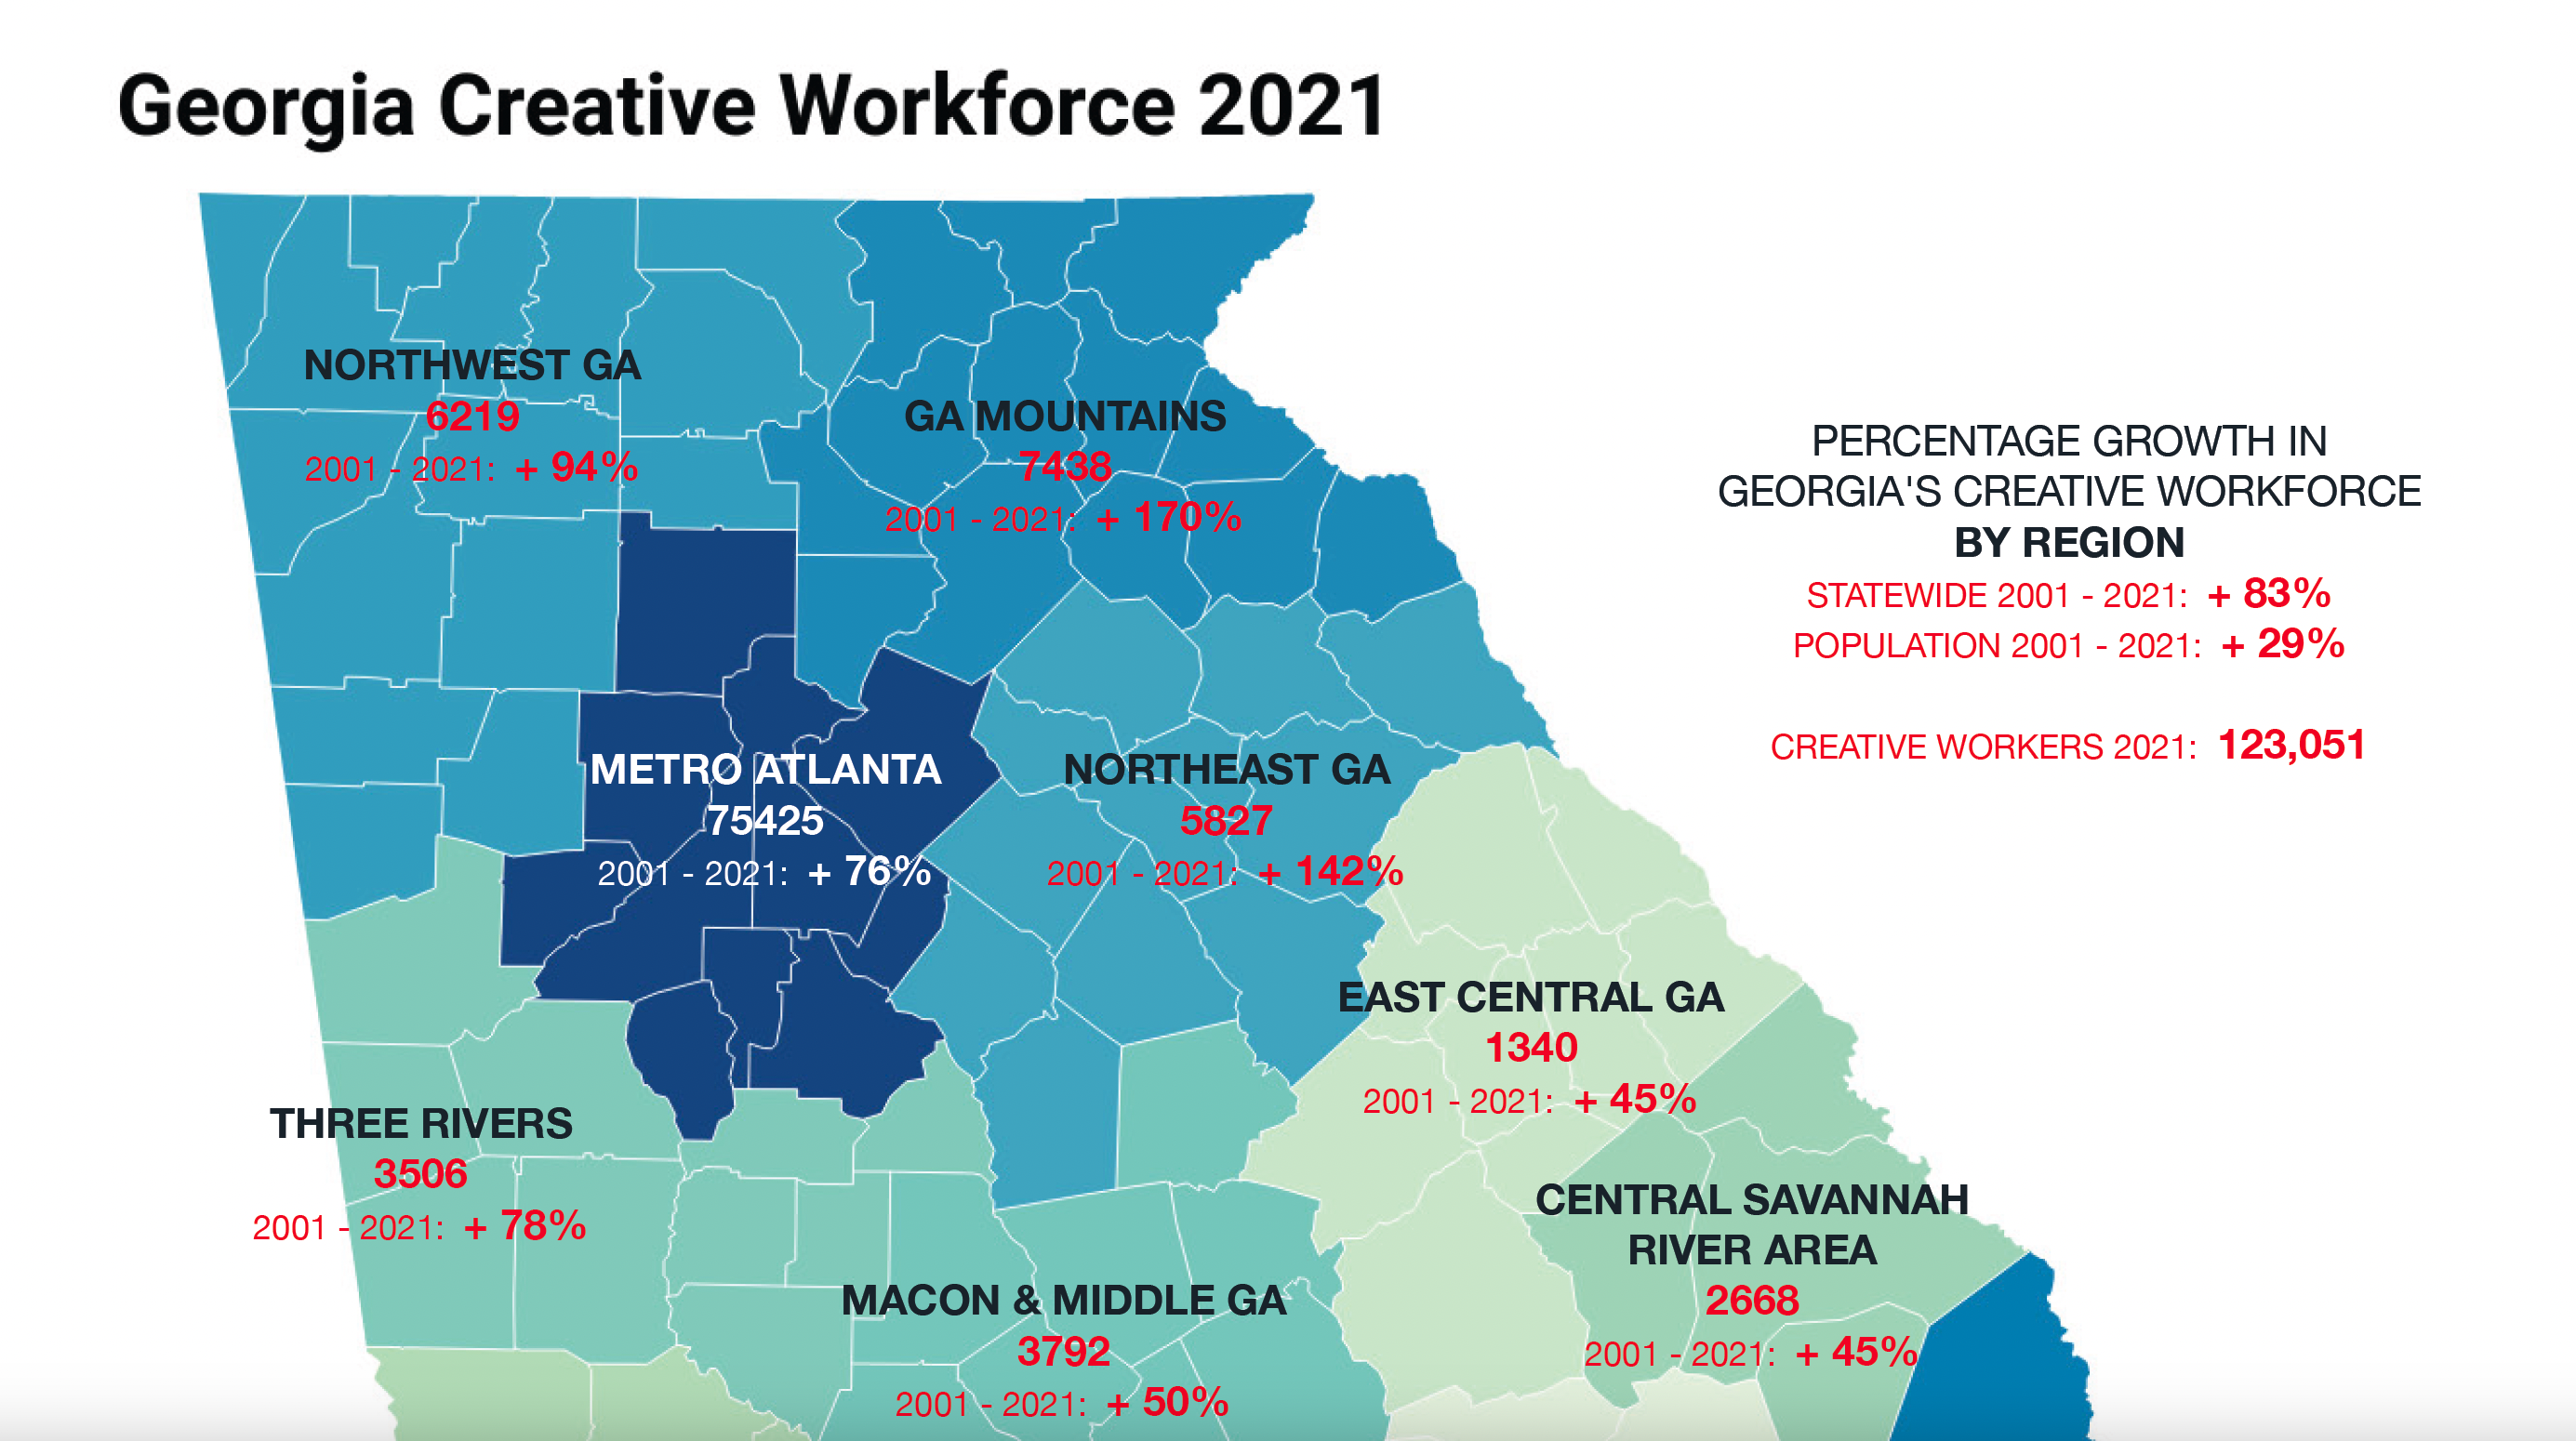 Georgia's Creative Workforce 2021